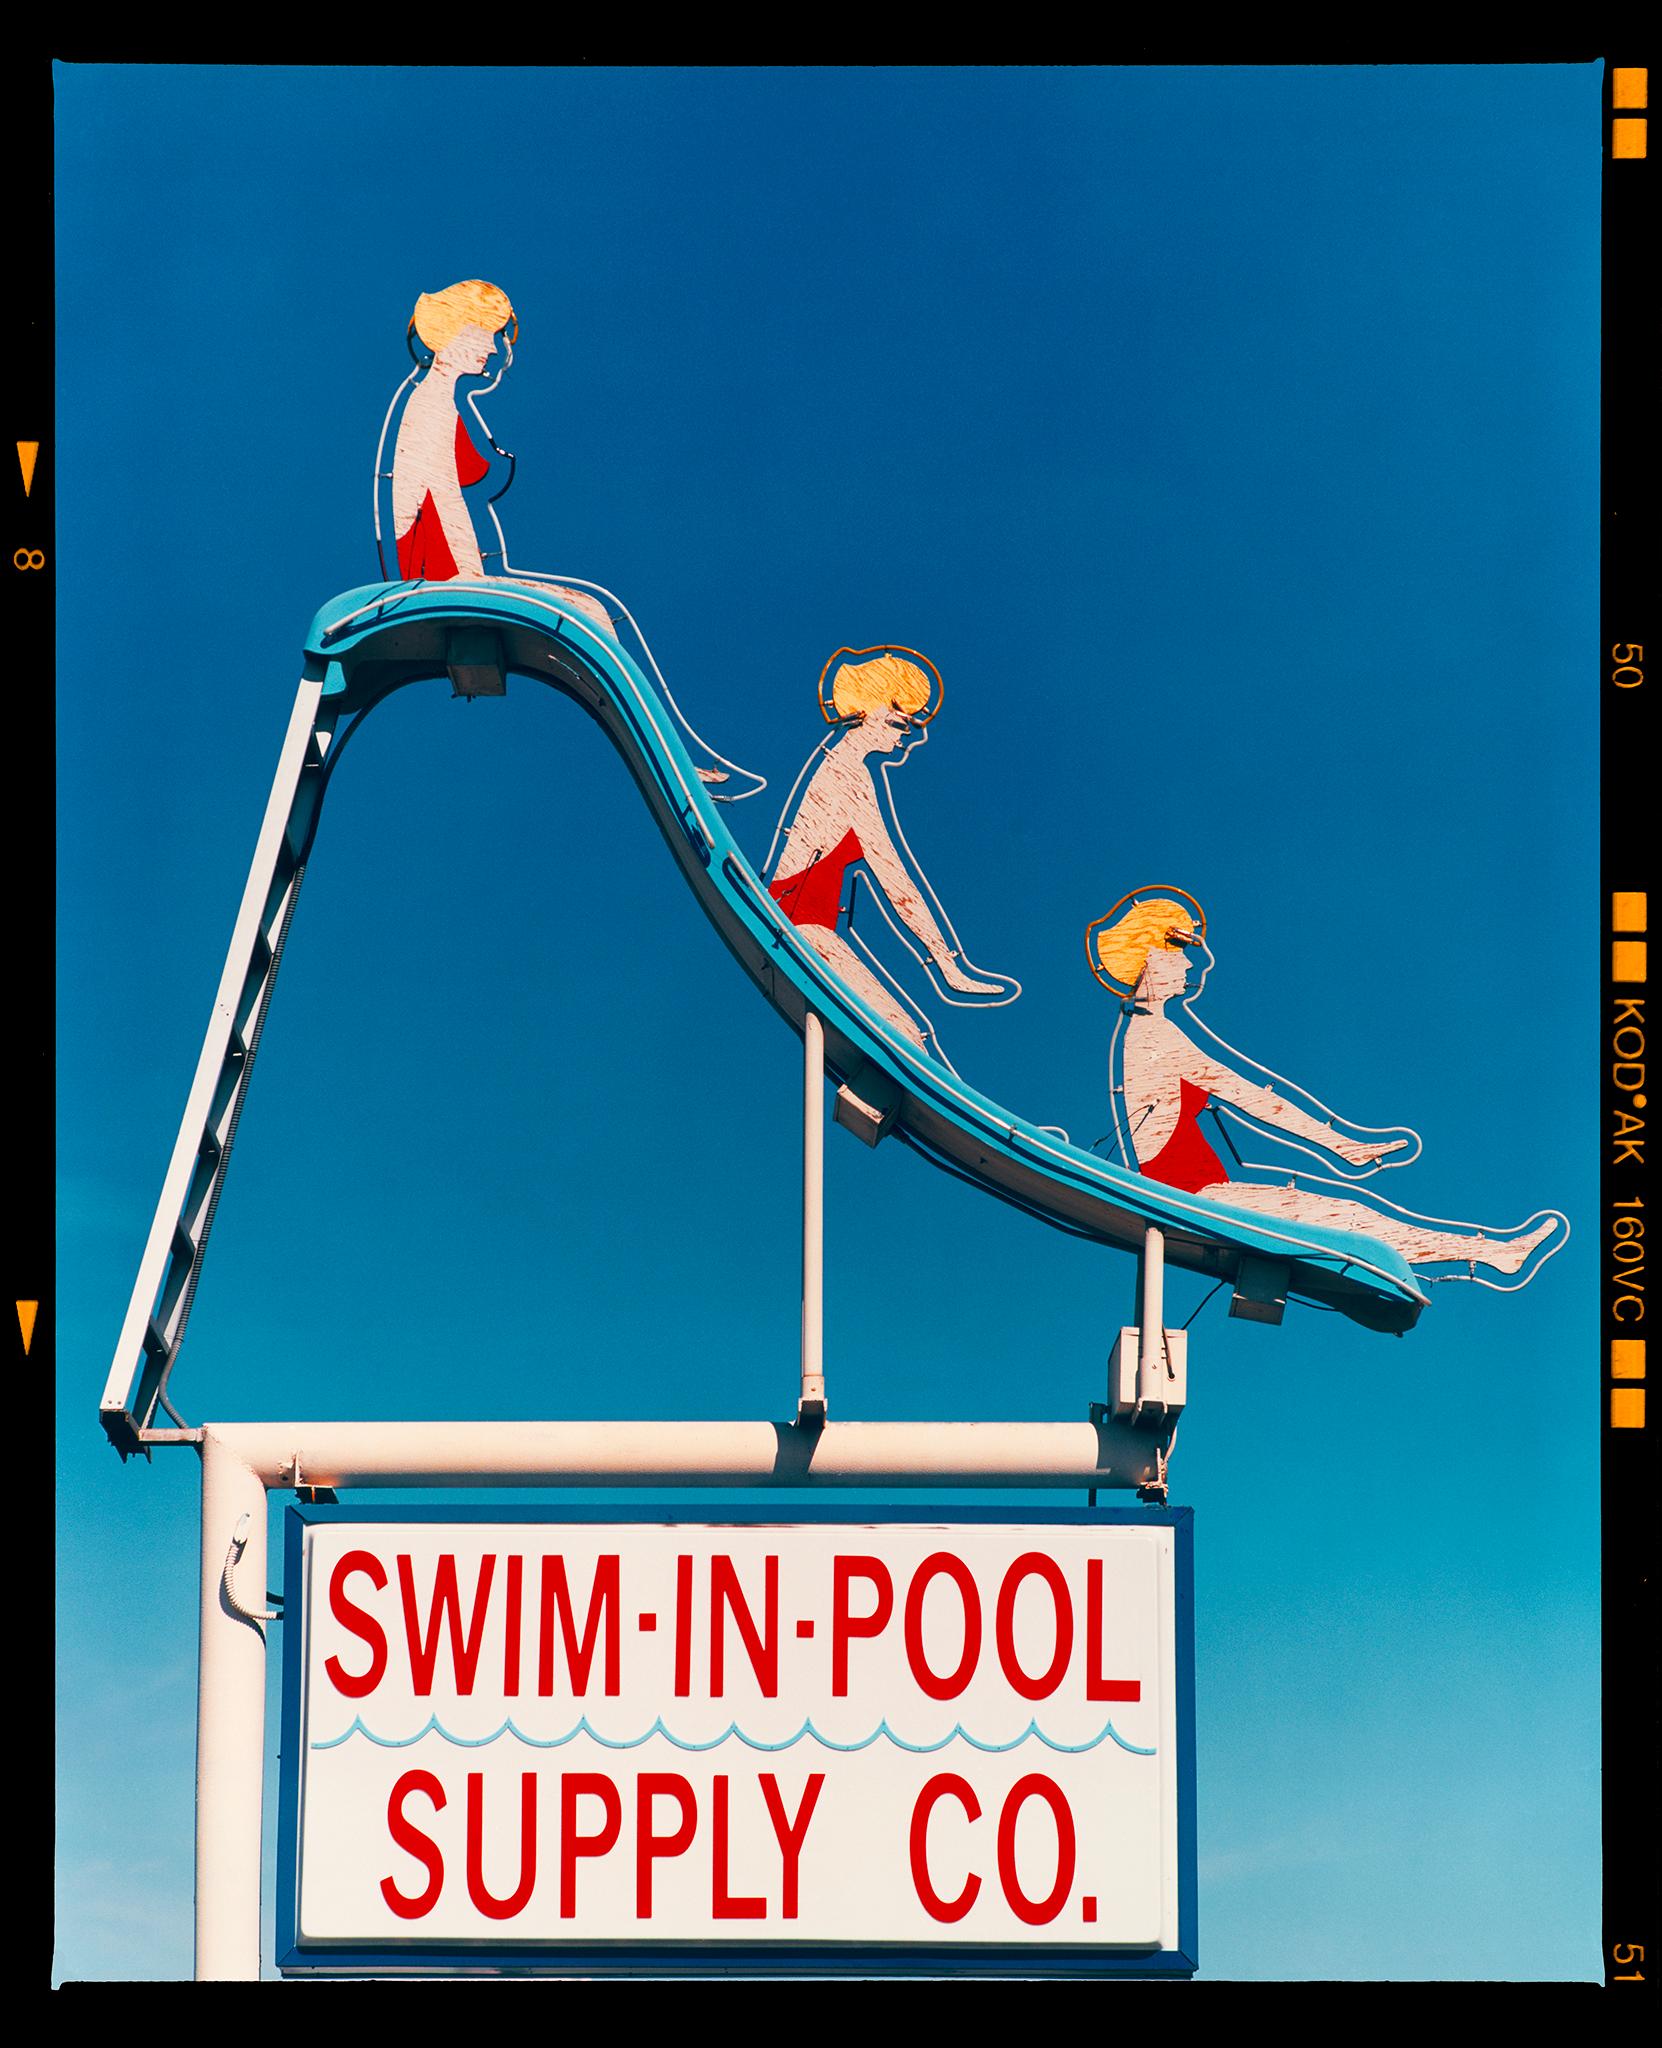 Richard Heeps Print – Swim-in-Pool Supply Co. Las Vegas – amerikanische Farbschildfotografie 